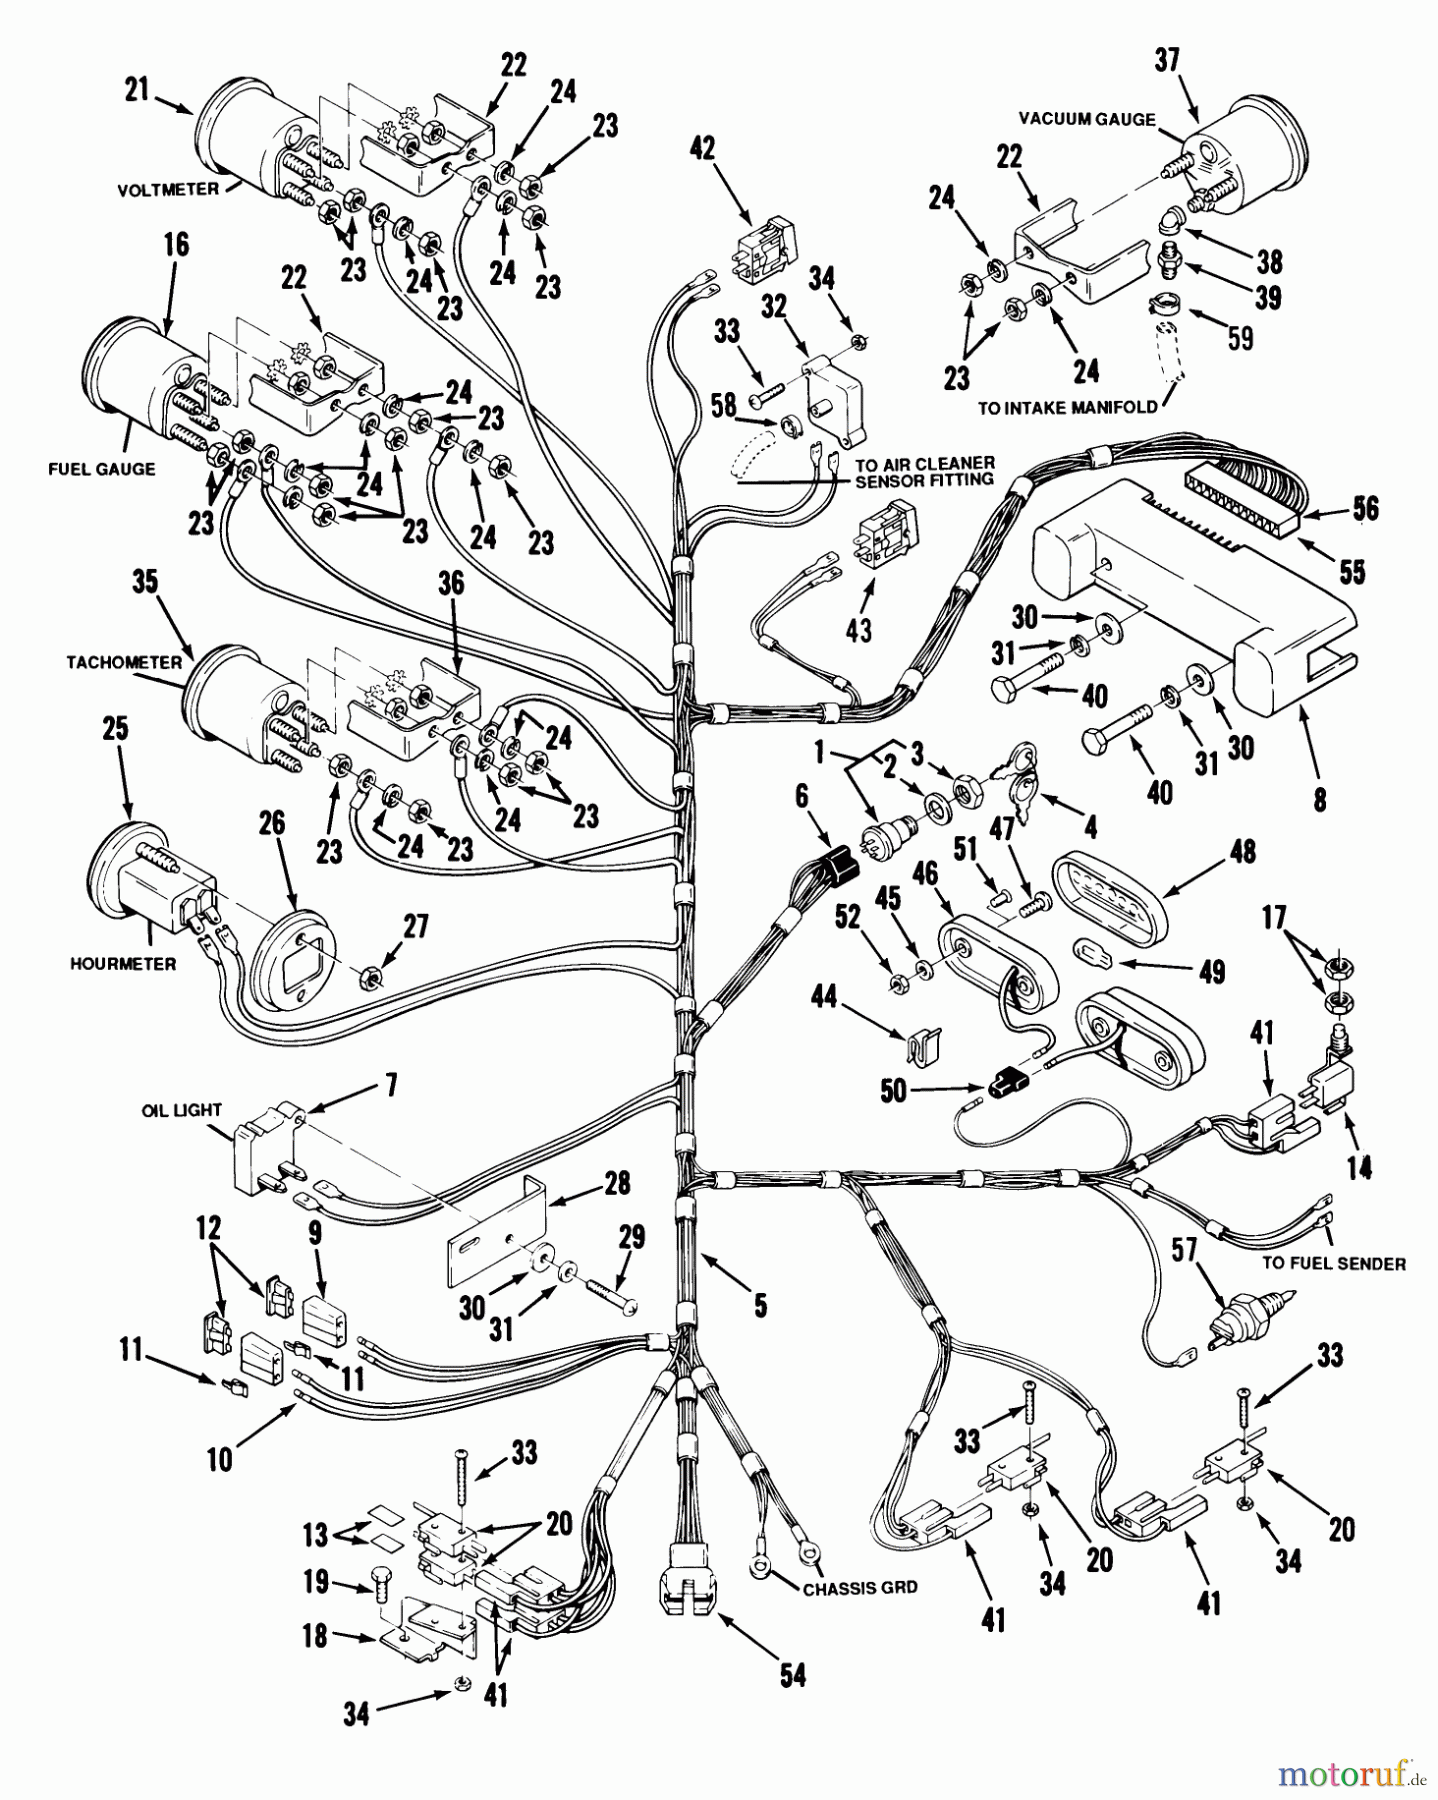  Toro Neu Mowers, Lawn & Garden Tractor Seite 1 31-20OE01 (520-H) - Toro 520-H Garden Tractor, 1988 ELECTRICAL SYSTEM #1